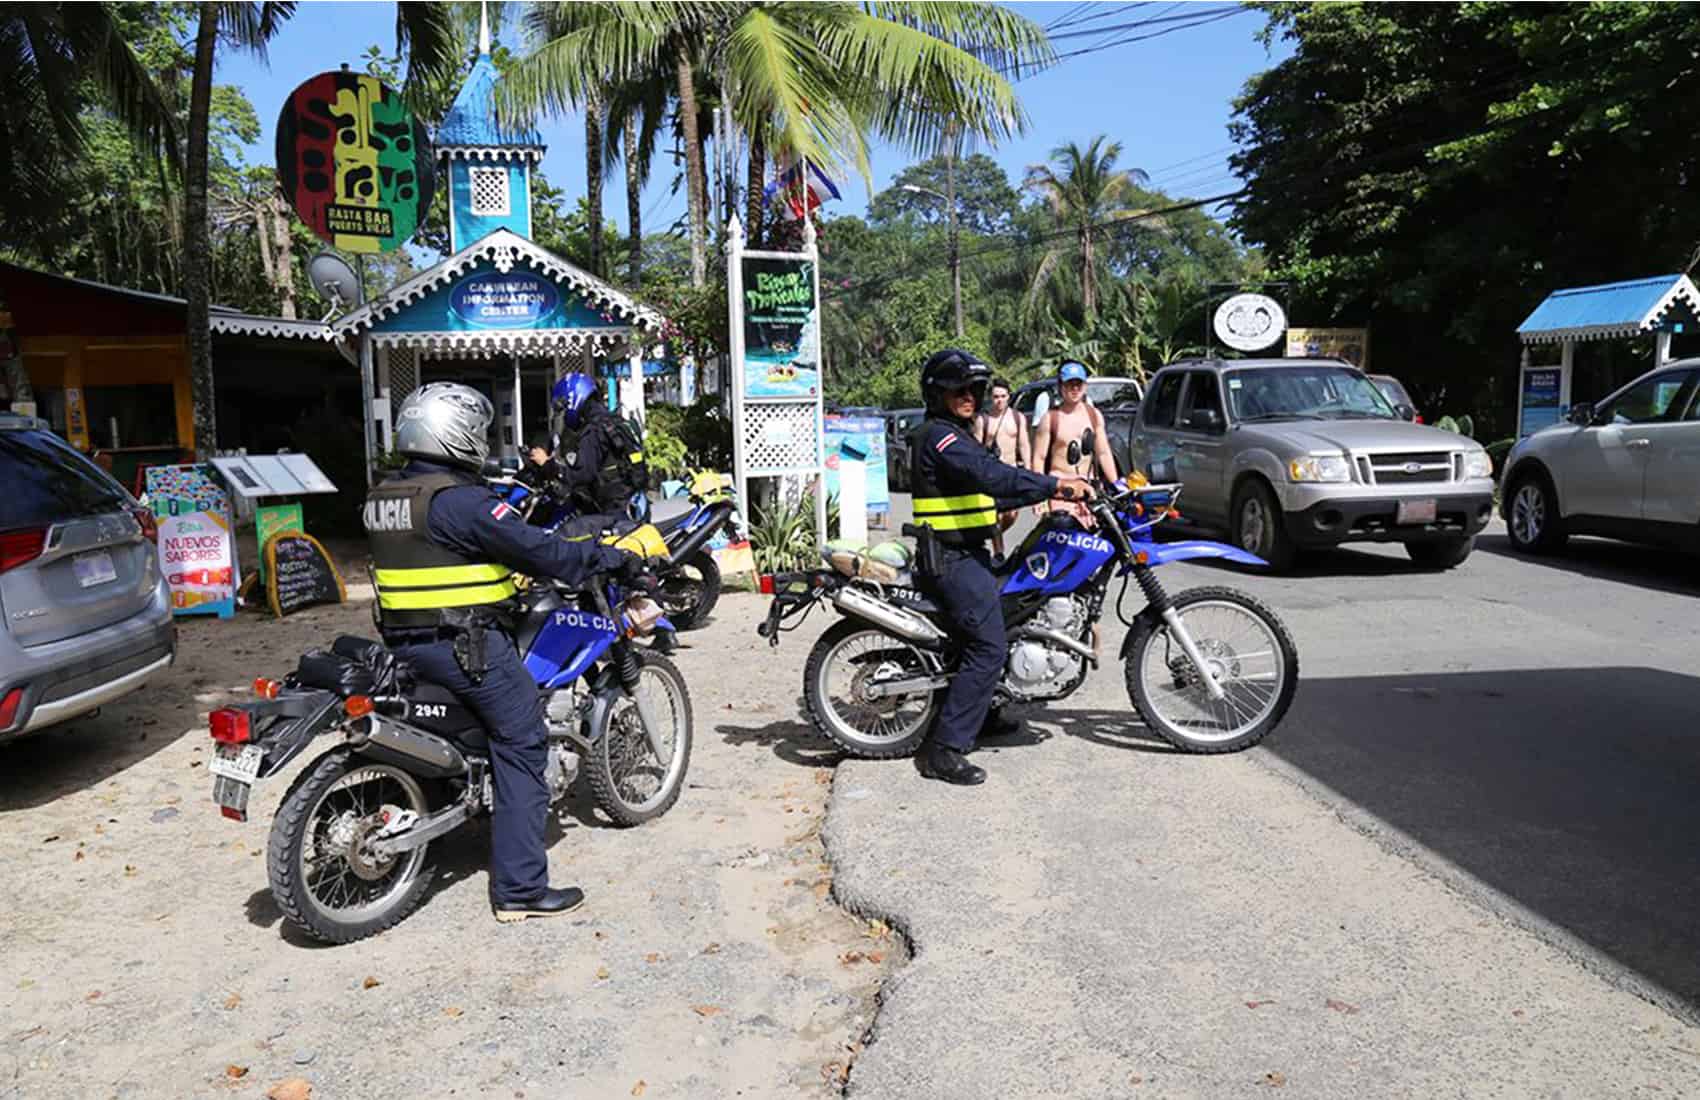 Police surveillance at Cahuita. March 13, 2017.